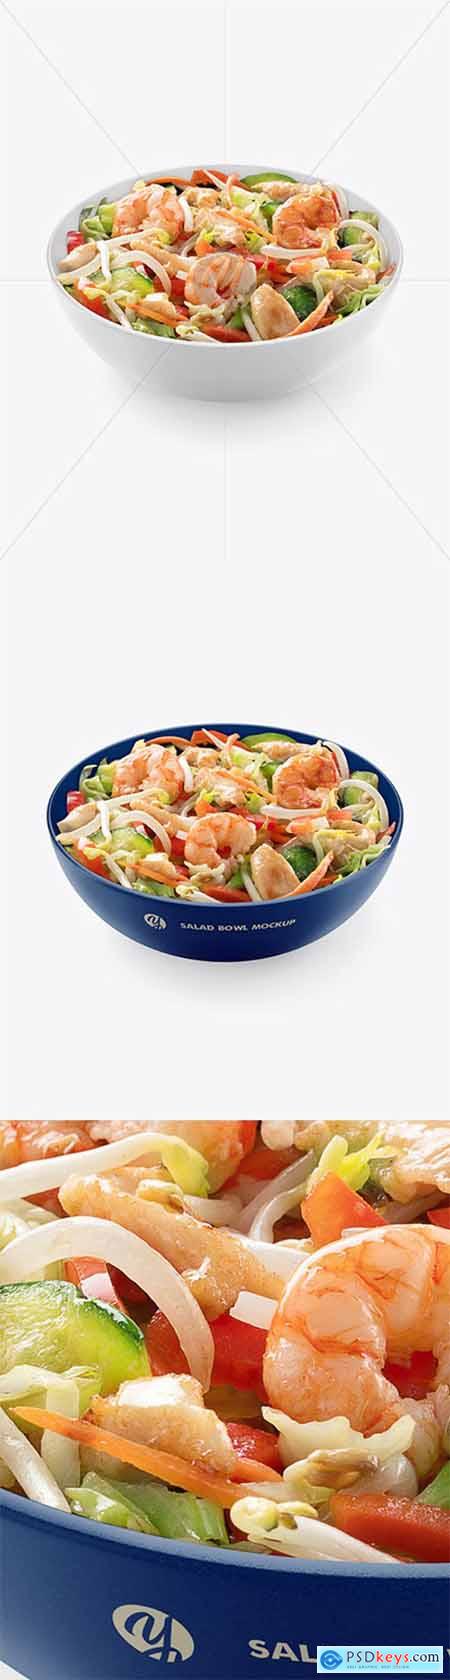 Download Salad w- Shrimps in a Bowl Mockup 60725 » Free Download Photoshop Vector Stock image Via Torrent ...